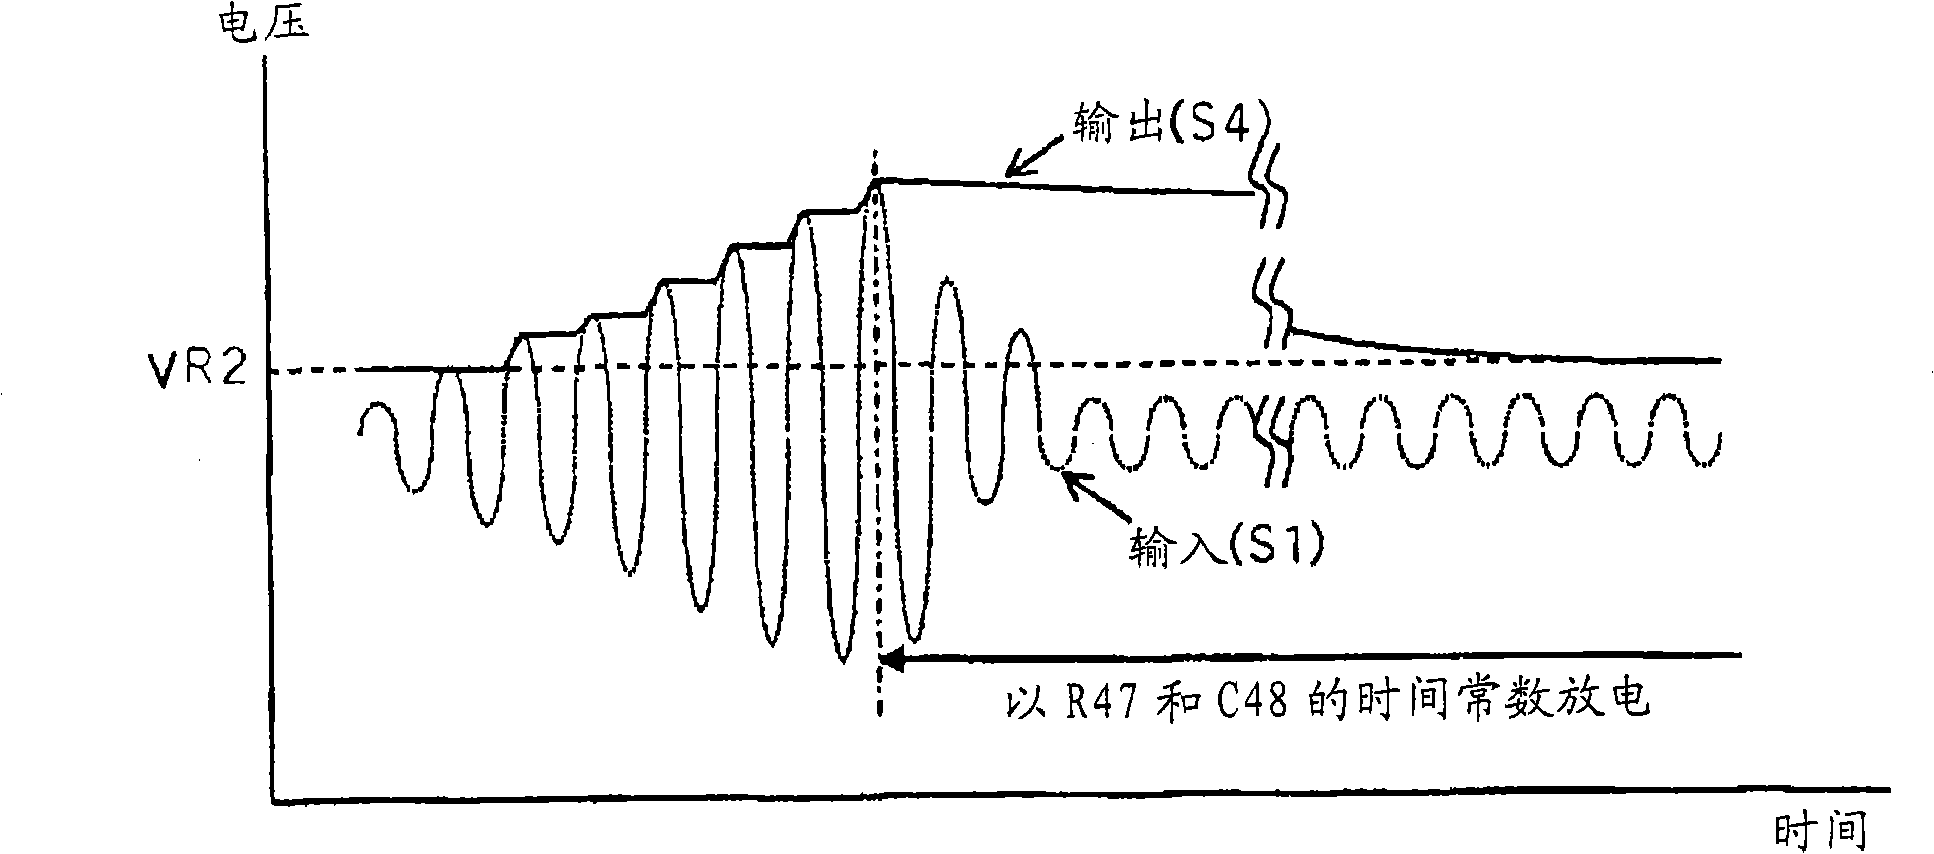 Peak-hold circuit and signal strength indicator using the peak-hold circuit